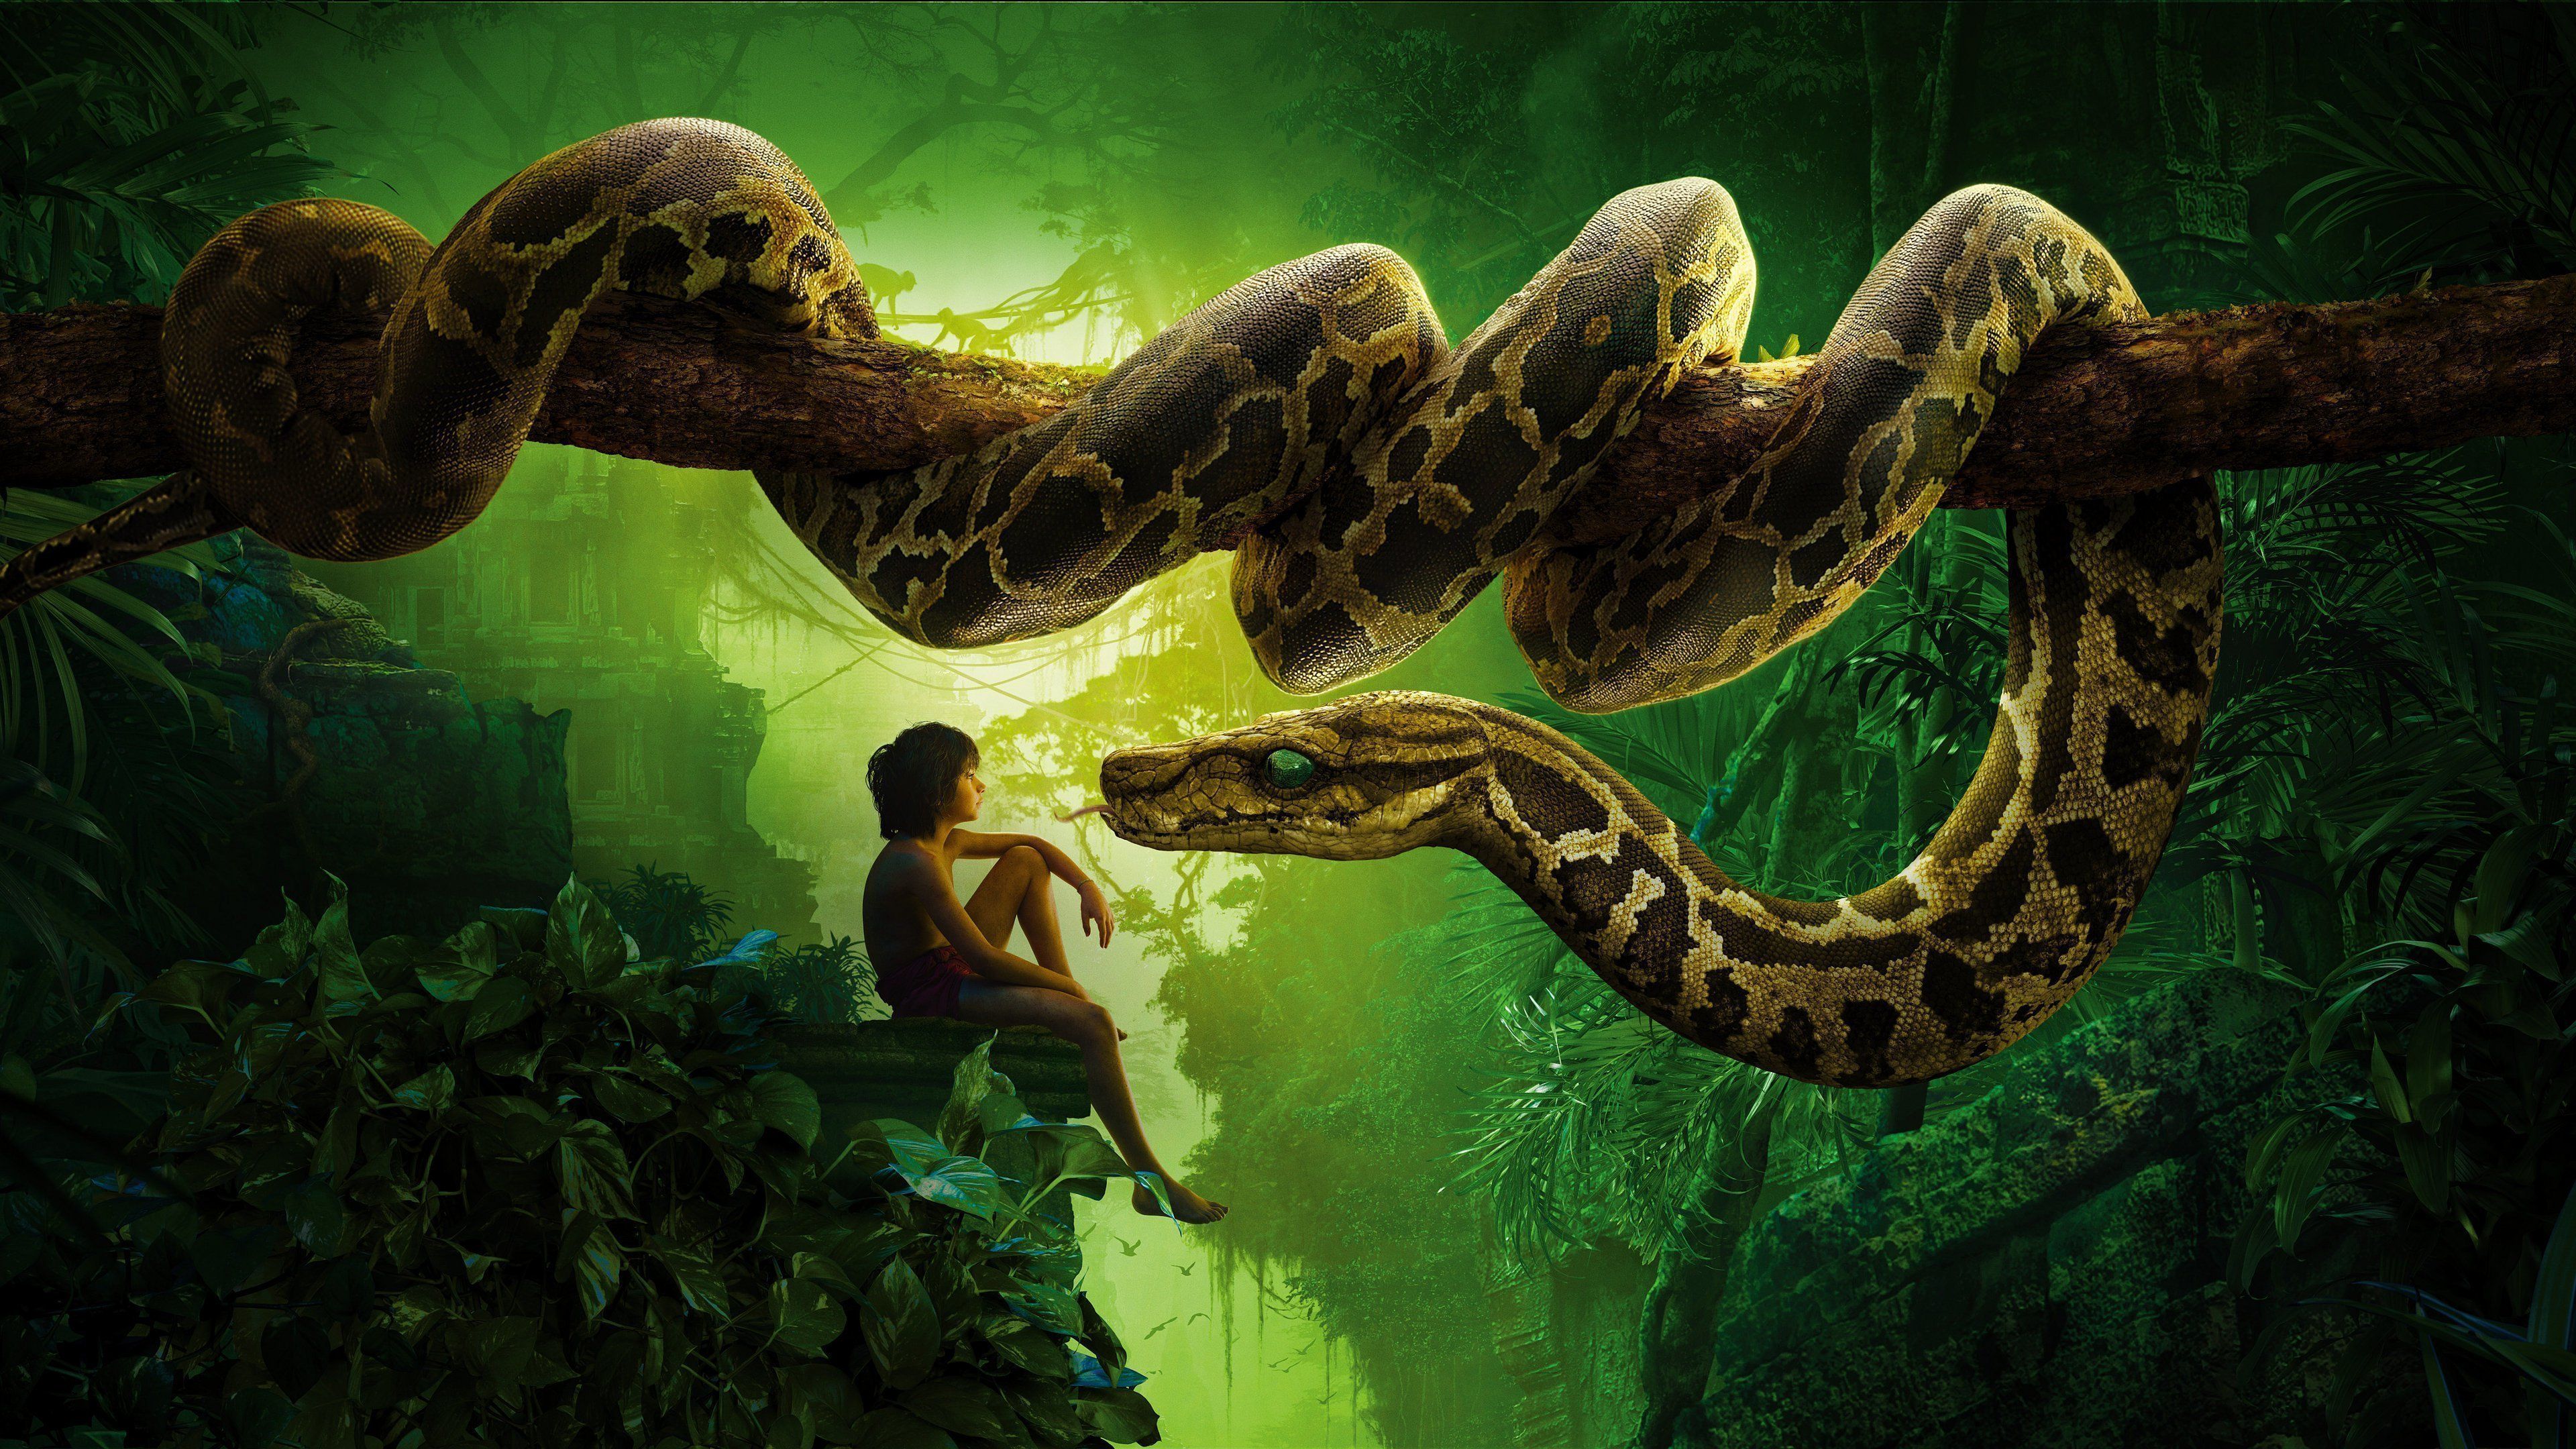 General 3840x2160 The Jungle Book children animals snake forest jungle trees green serpent python side view digital art